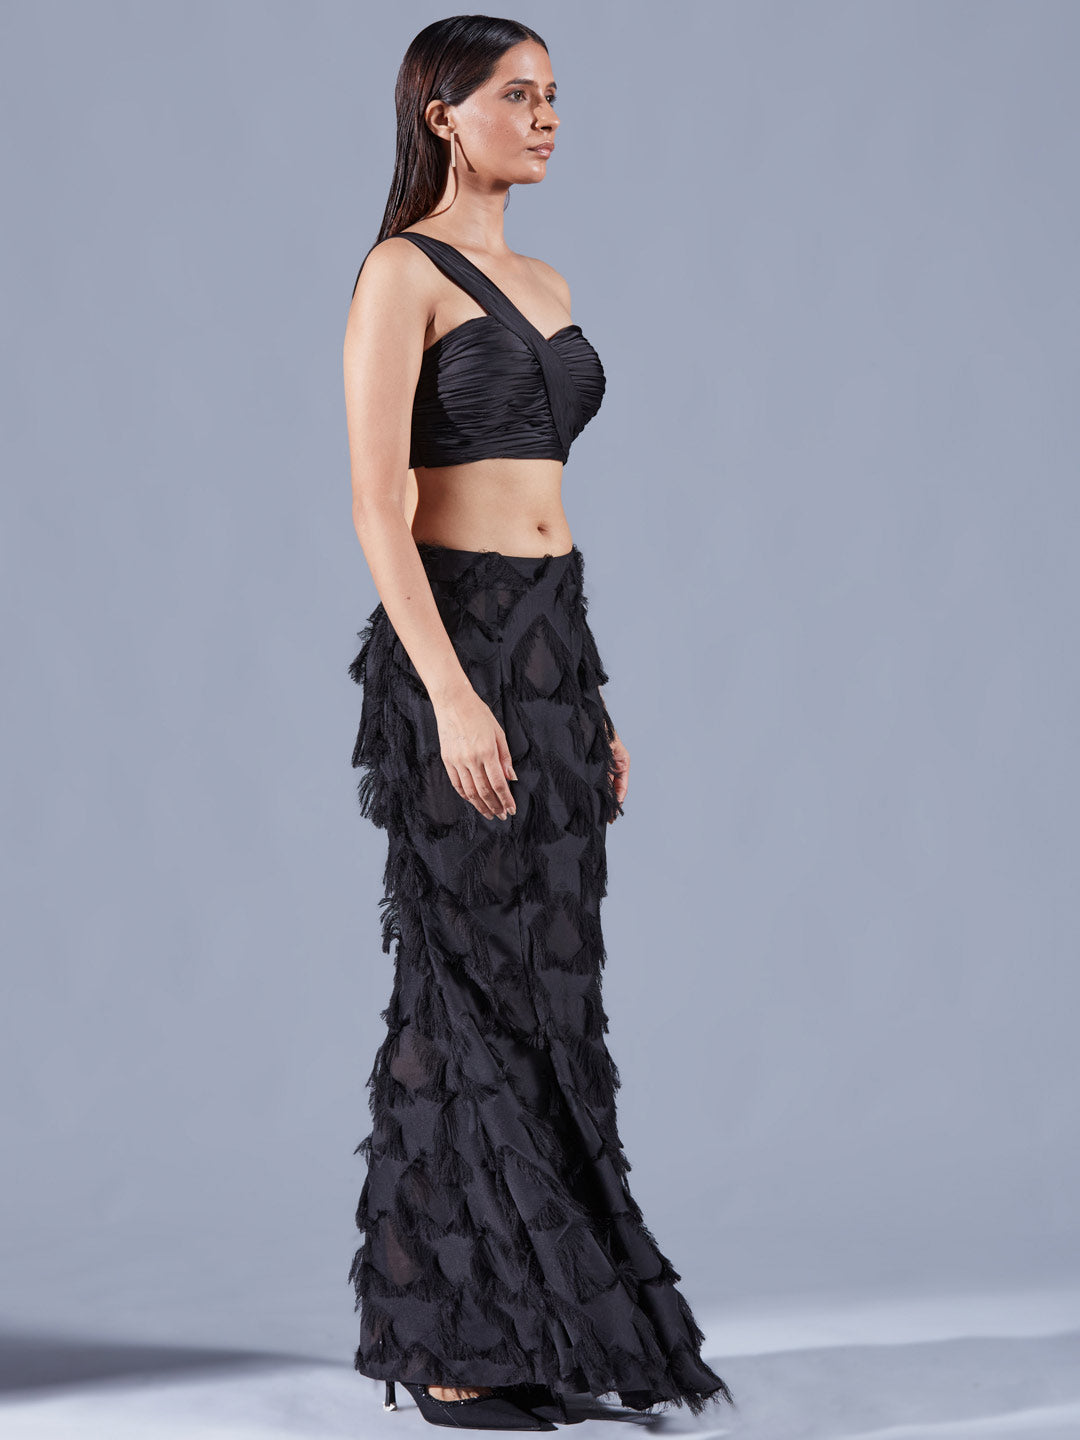 Raven Mermaid Skirt Set - Auruhfy India